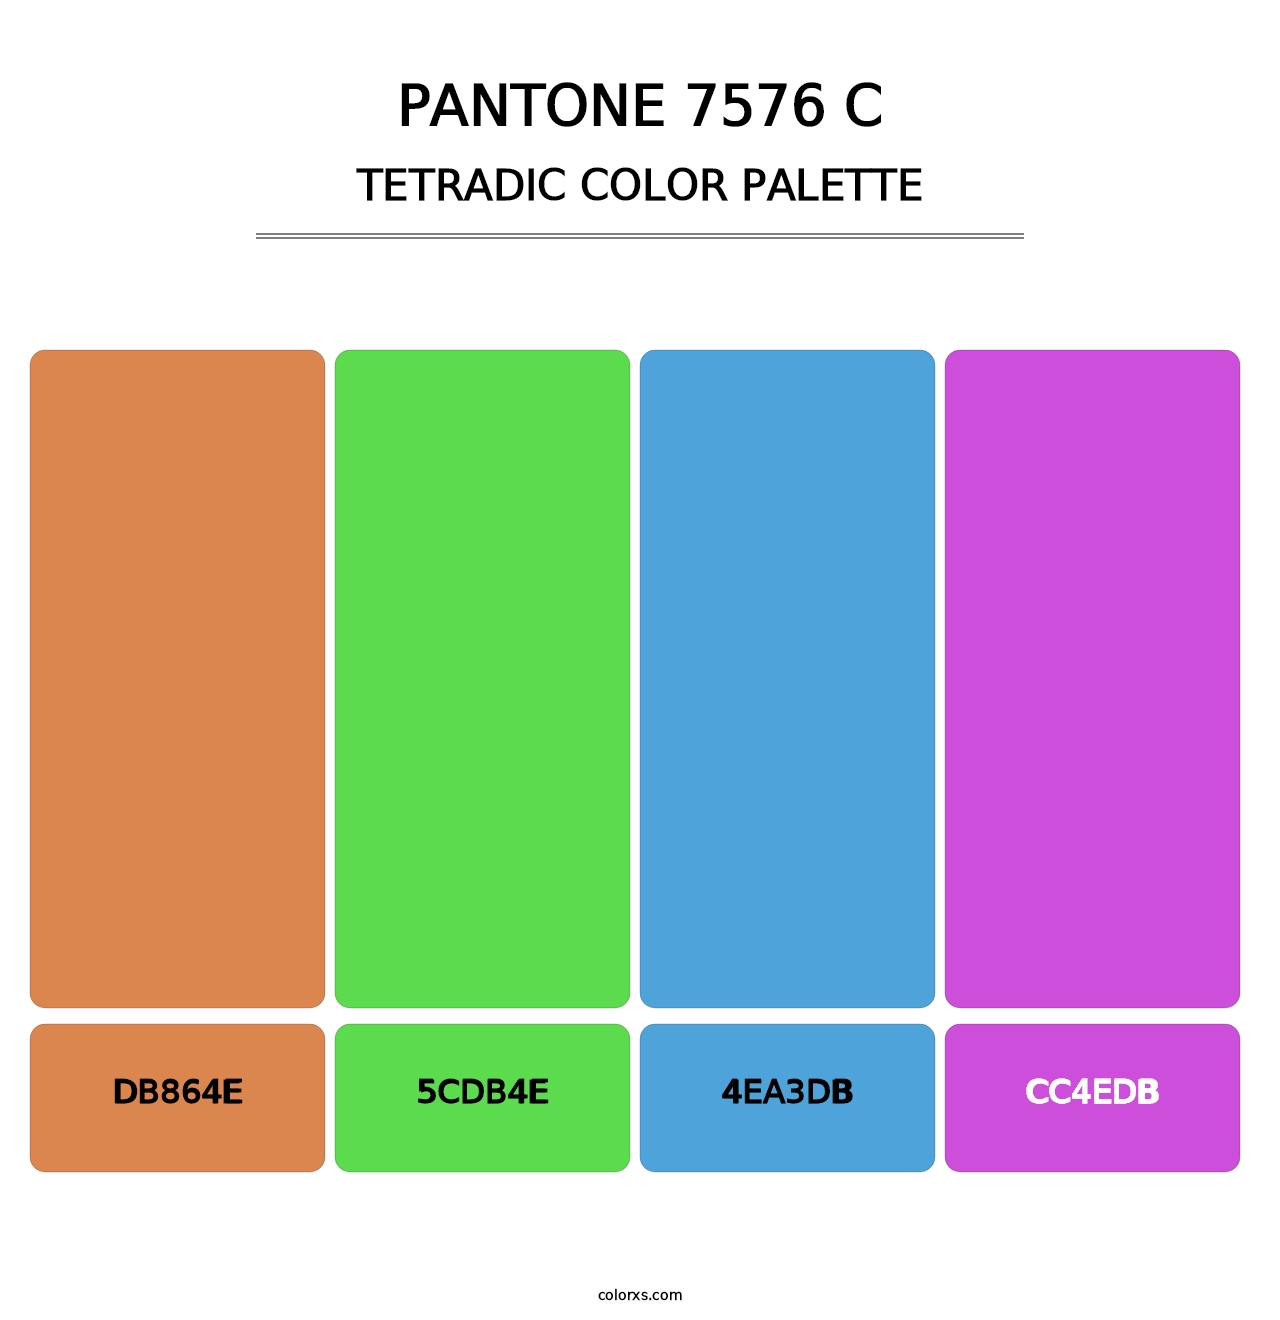 PANTONE 7576 C - Tetradic Color Palette